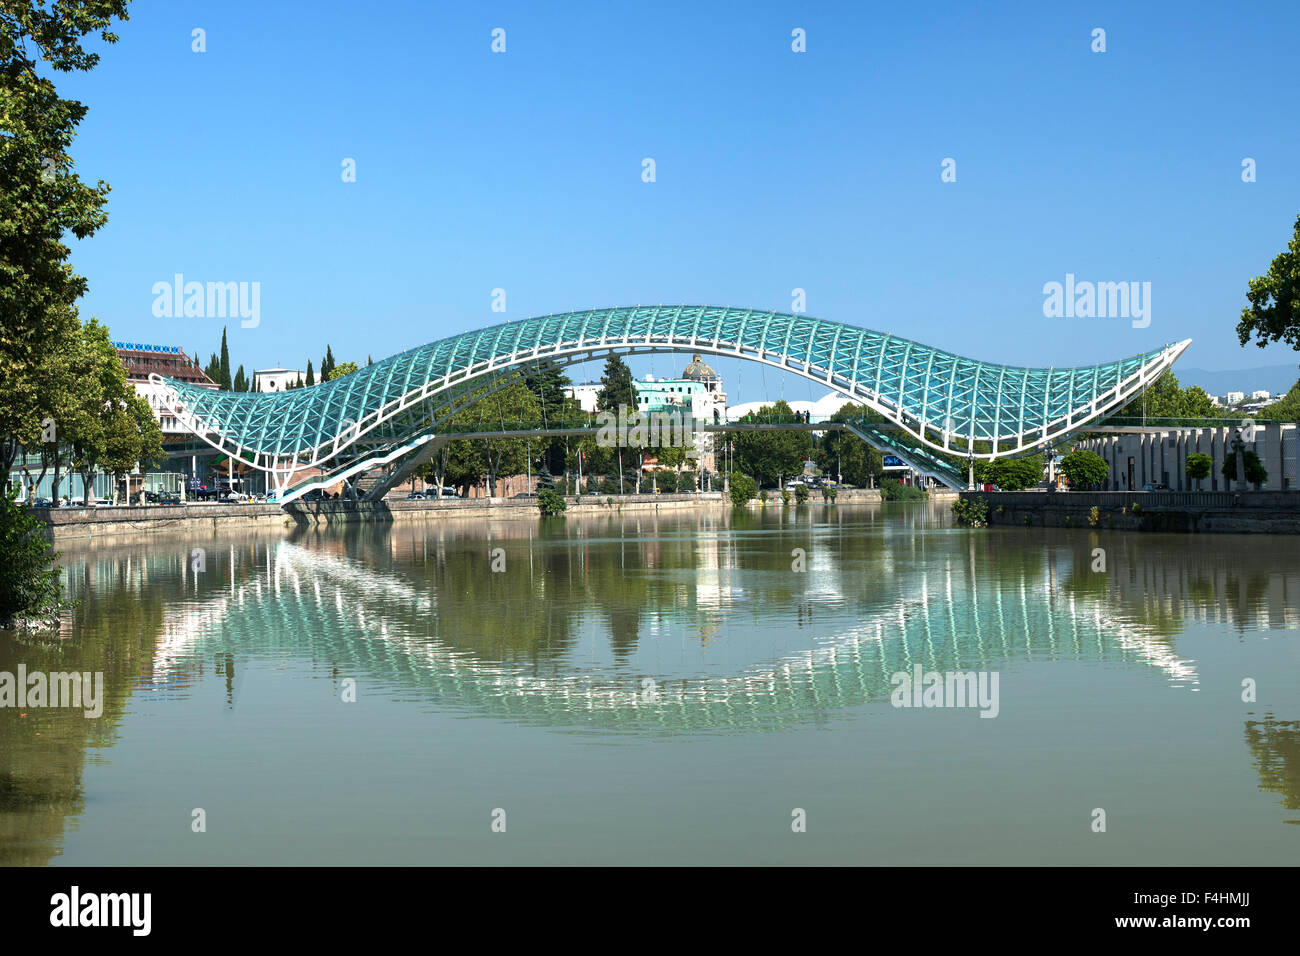 The Bridge of Peace, a pedestrian bridge spanning the Mtkvari River in Tbilisi, the capital of Georgia. Stock Photo